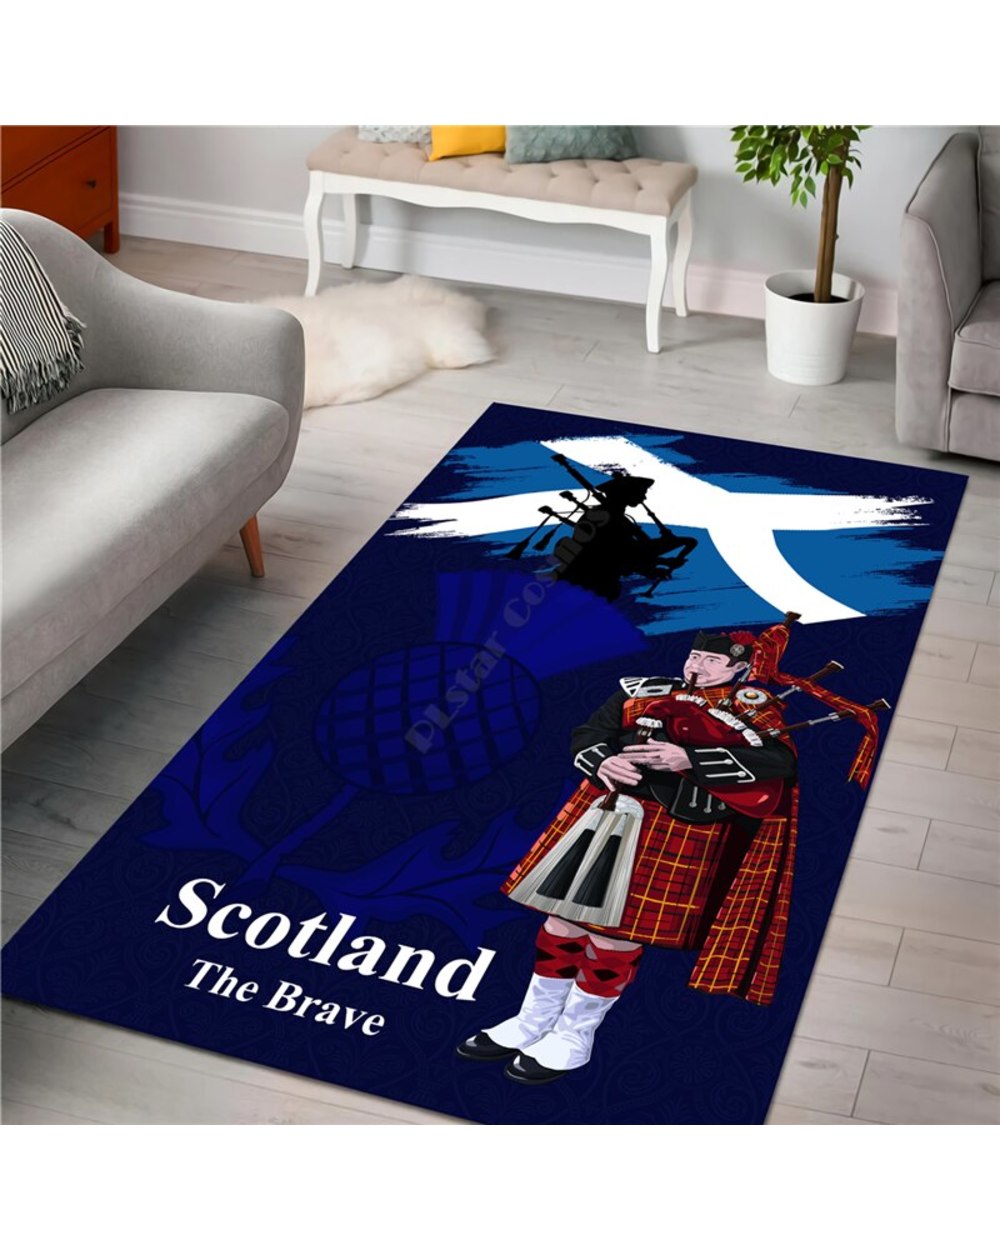 Scotland the brave man rug 1